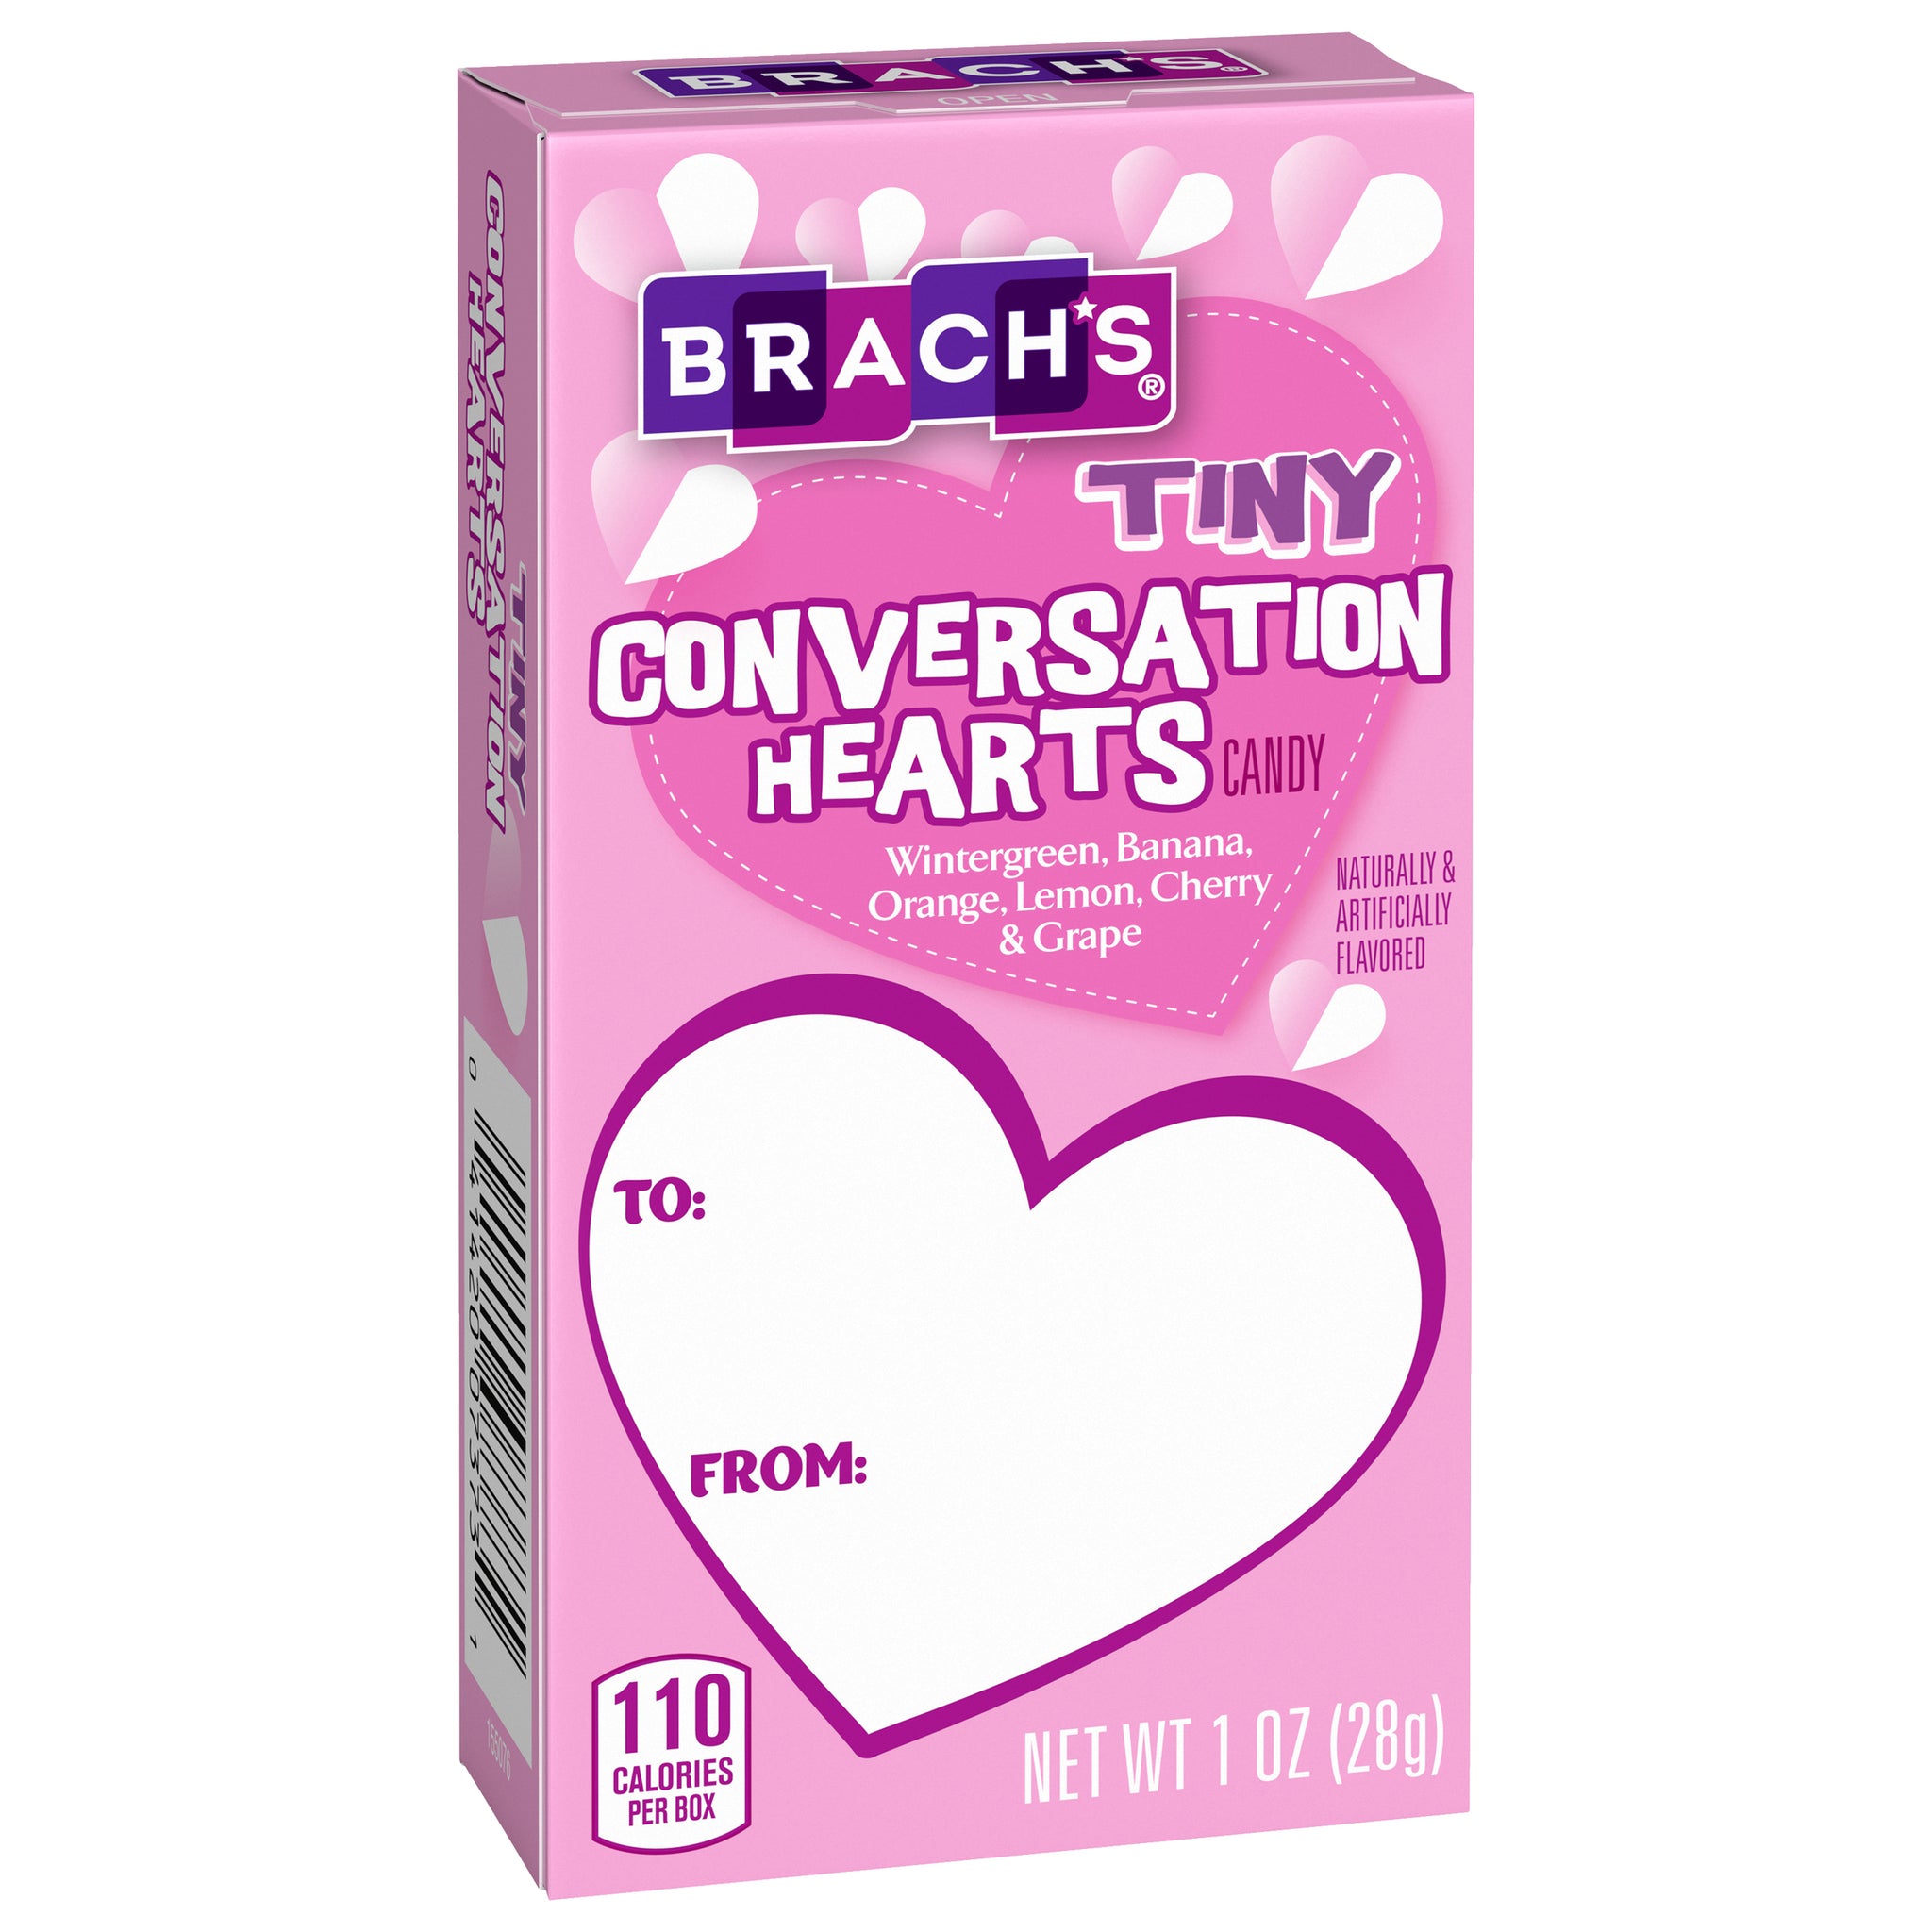 Tiny conversation hearts - Brach's - 1 oz